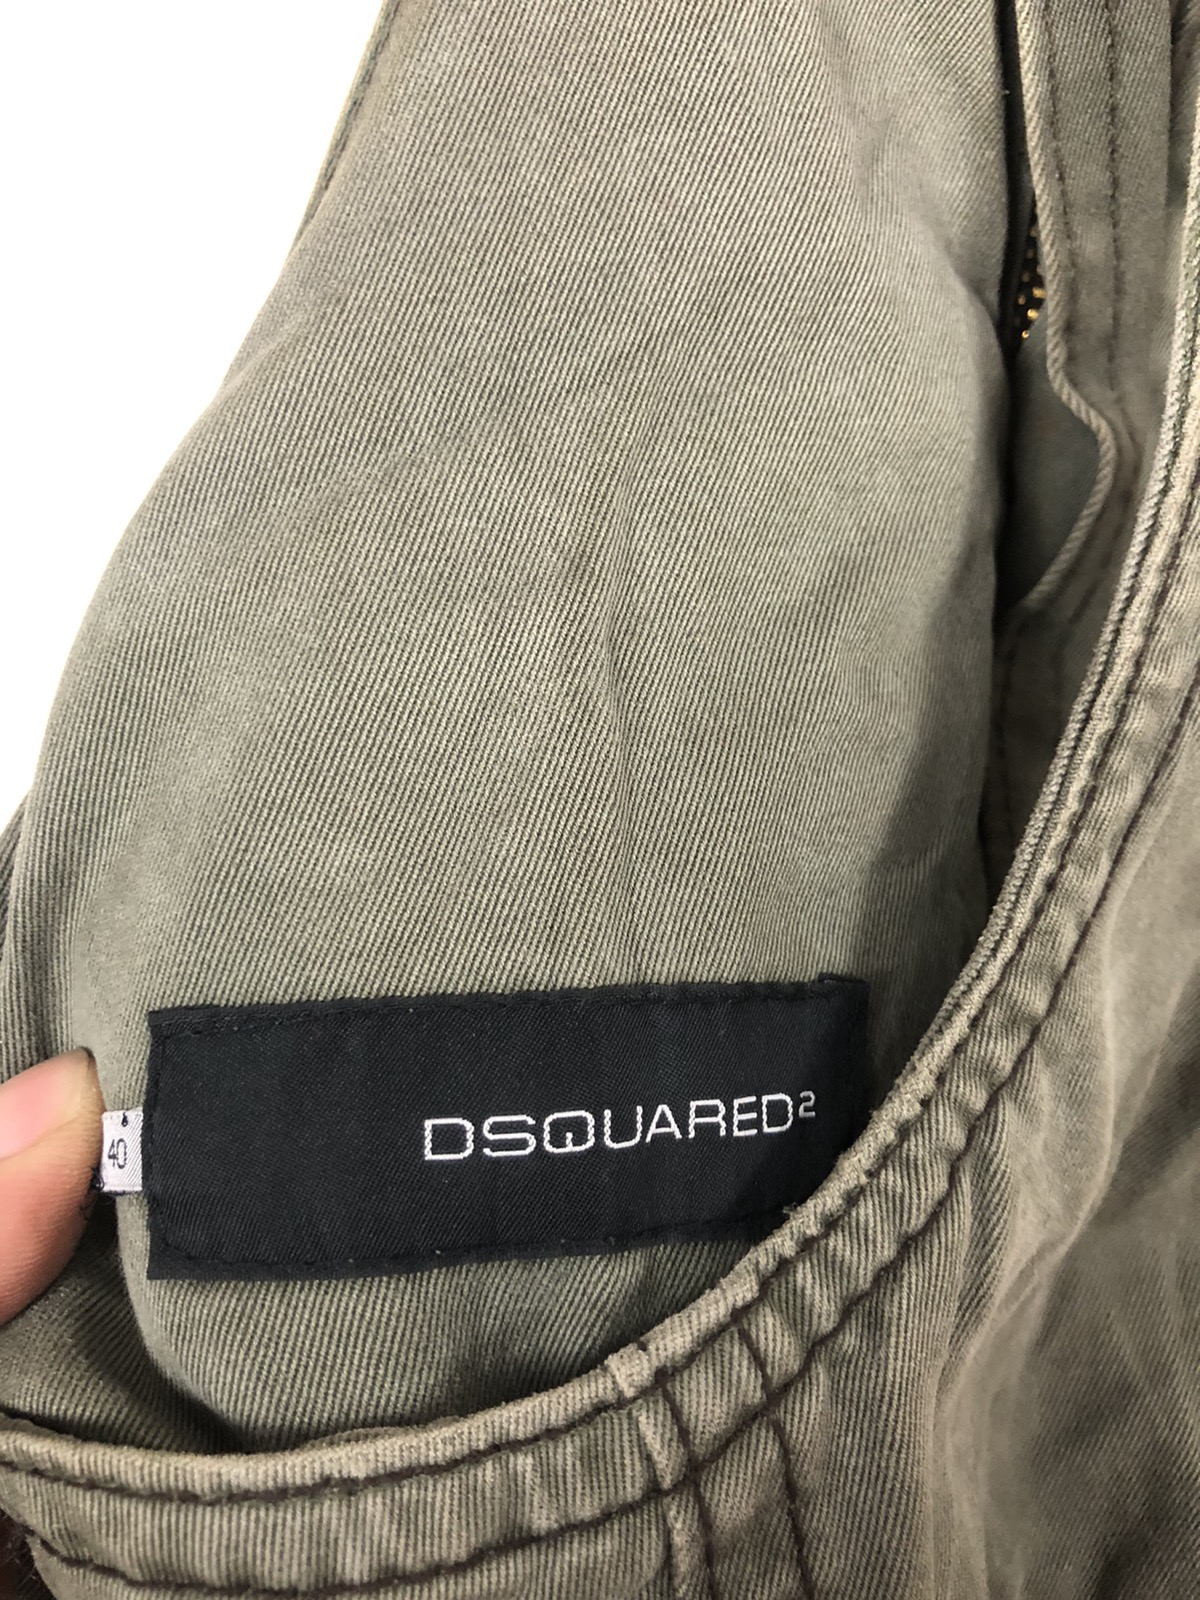 Disquarde2 Bondage Vest Made in Italy - 8